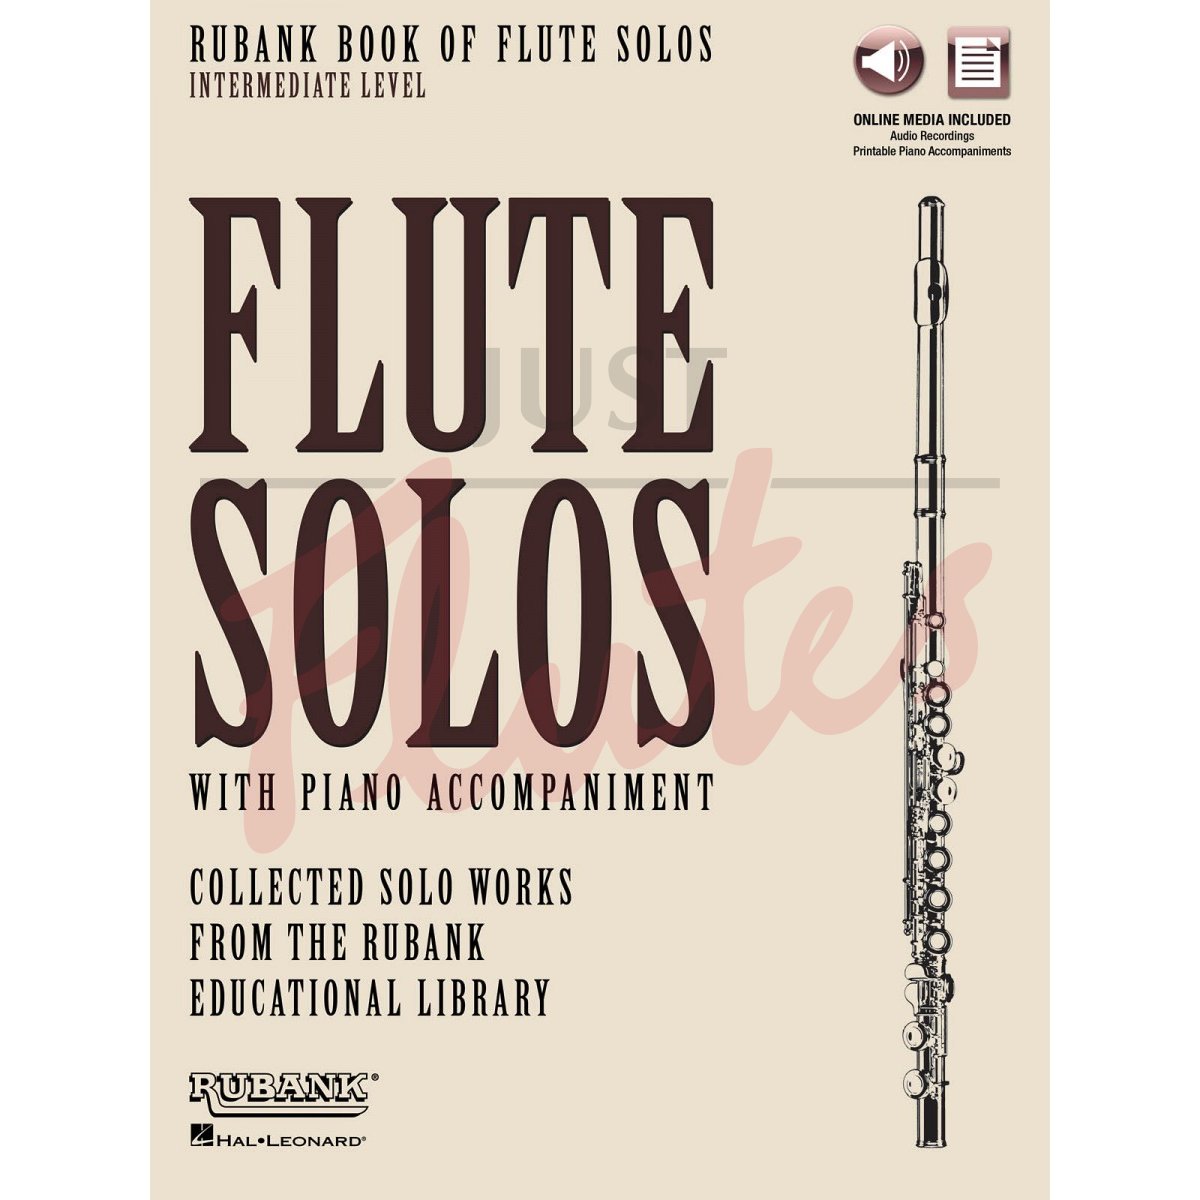 Rubank Book of Flute Solos [Intermediate Level]